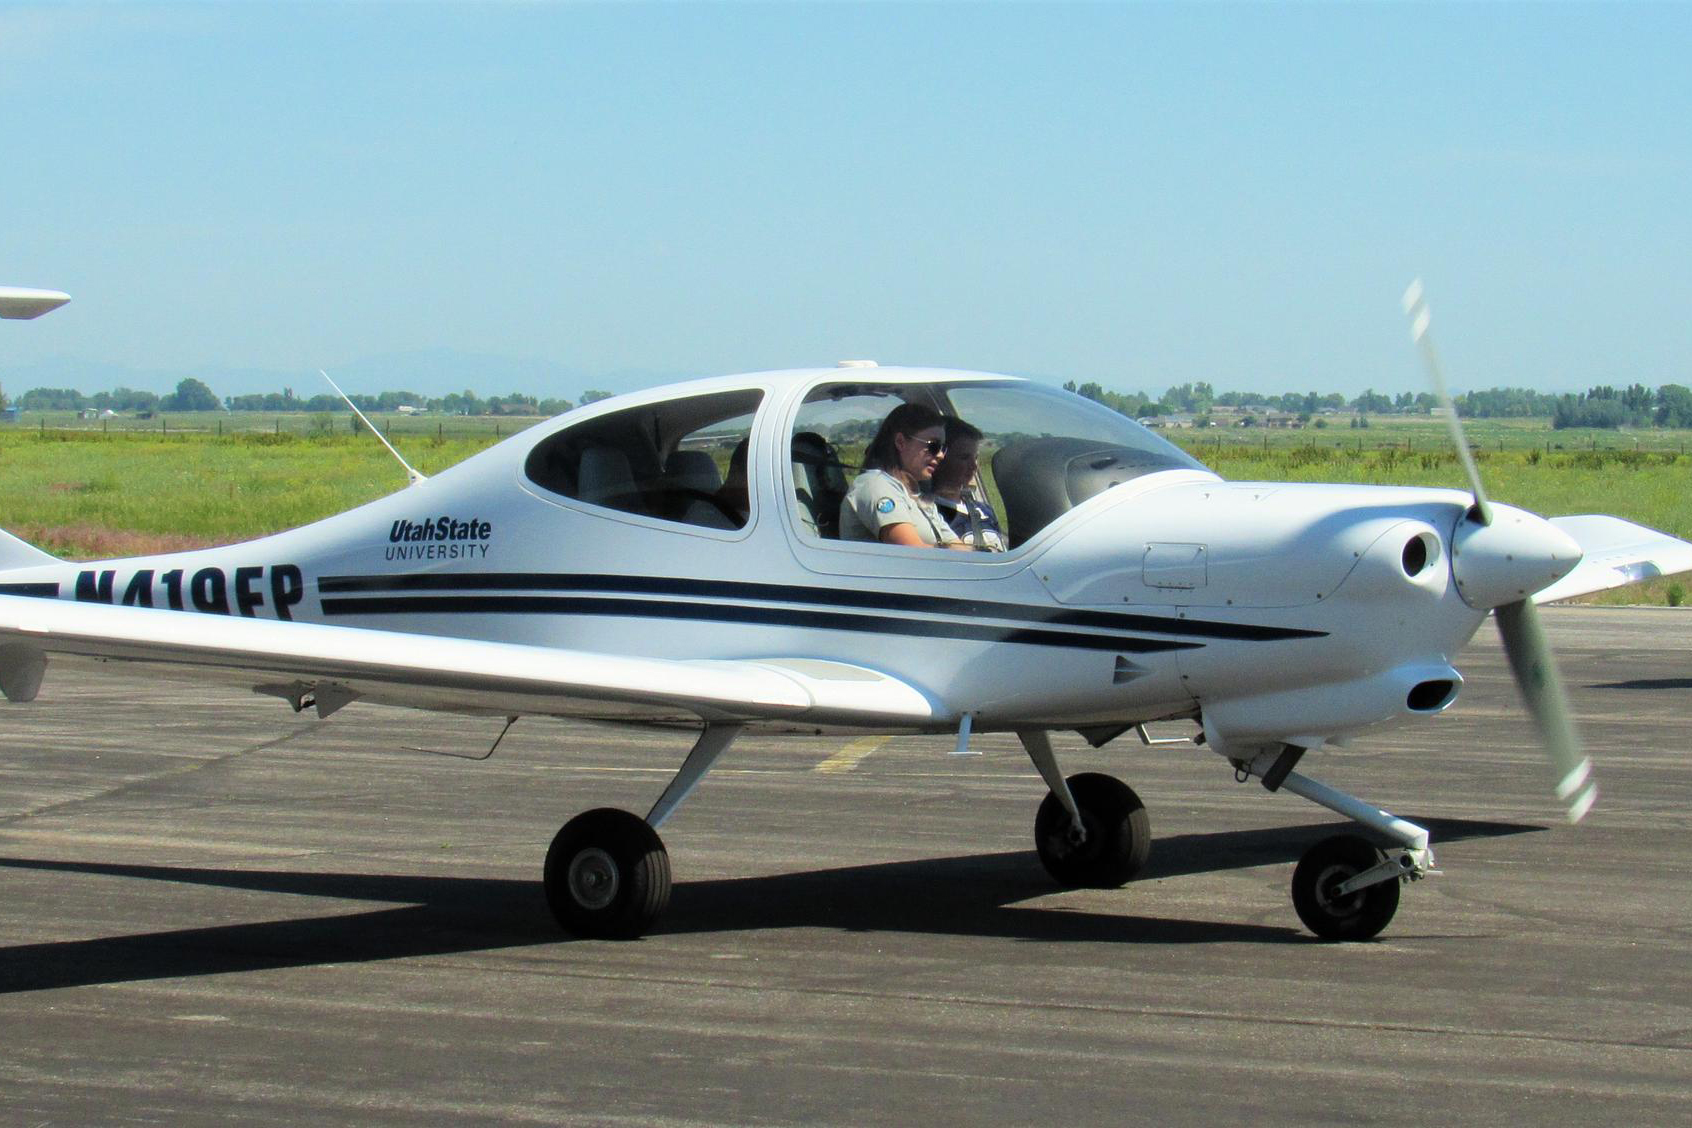 Aggie Aviation